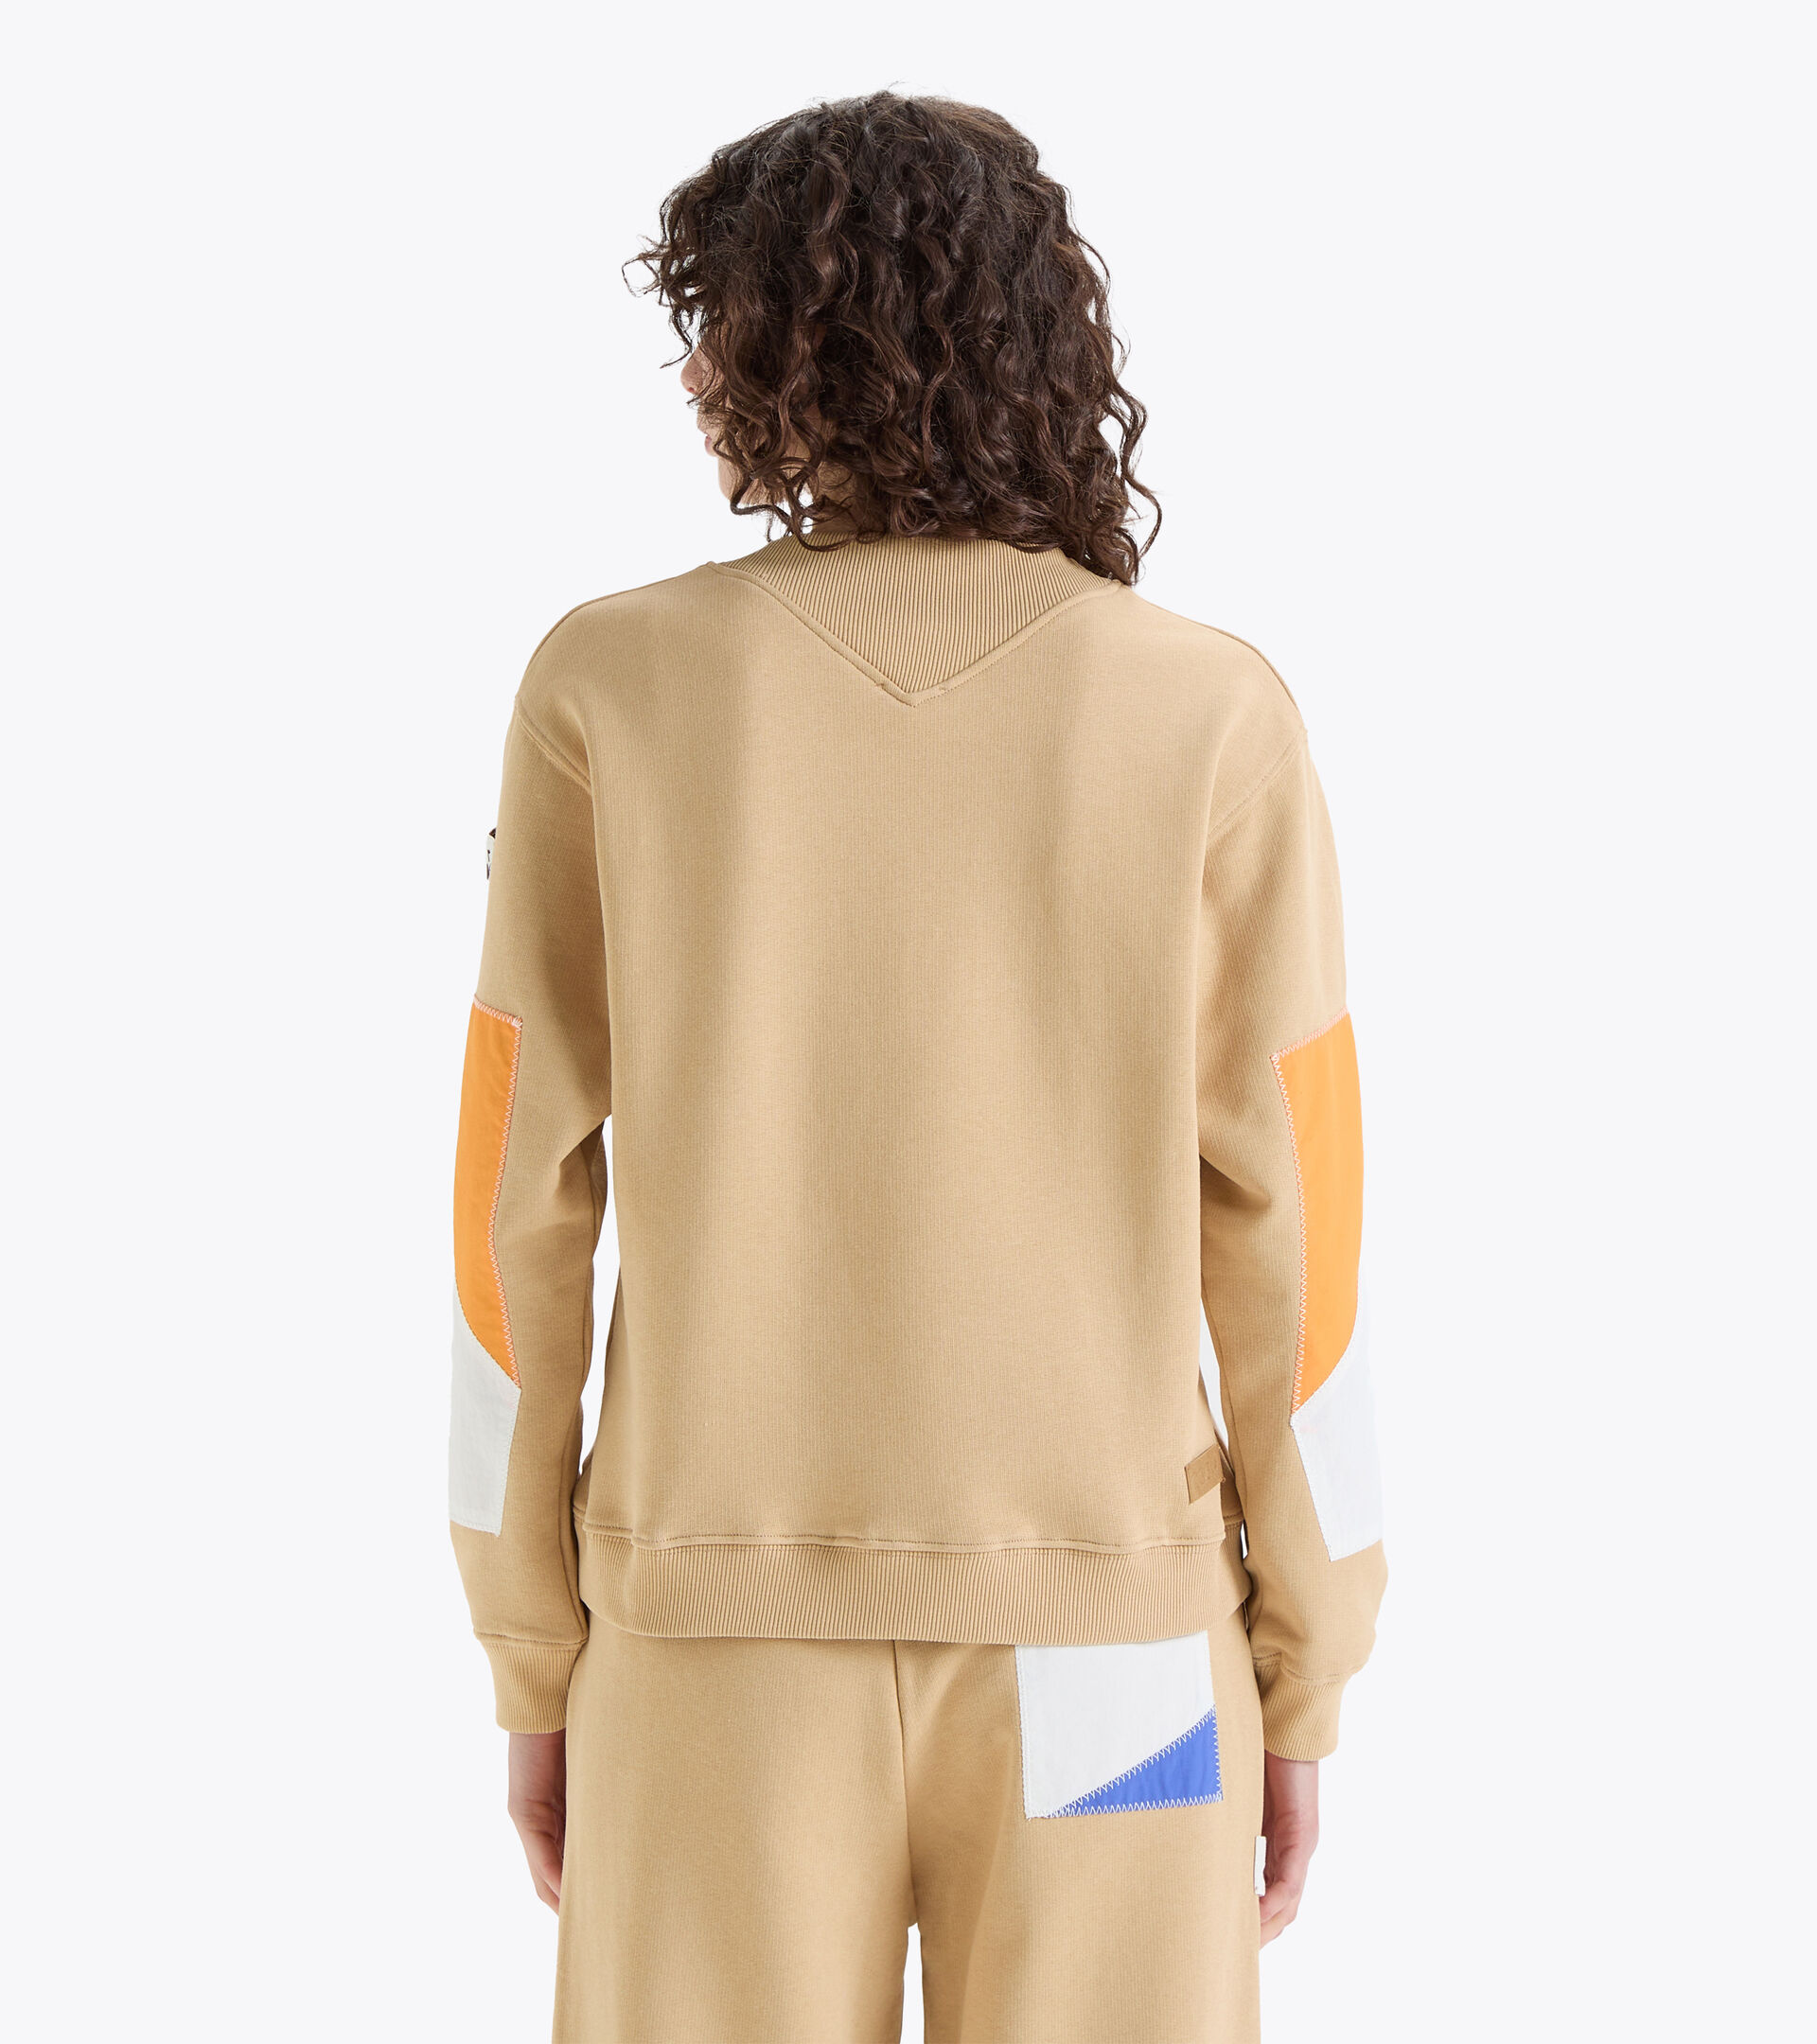 Made in Italy sweatshirt 2030 - Women  L. SWEATSHIRT CREW 2030 WARM SAND - Diadora